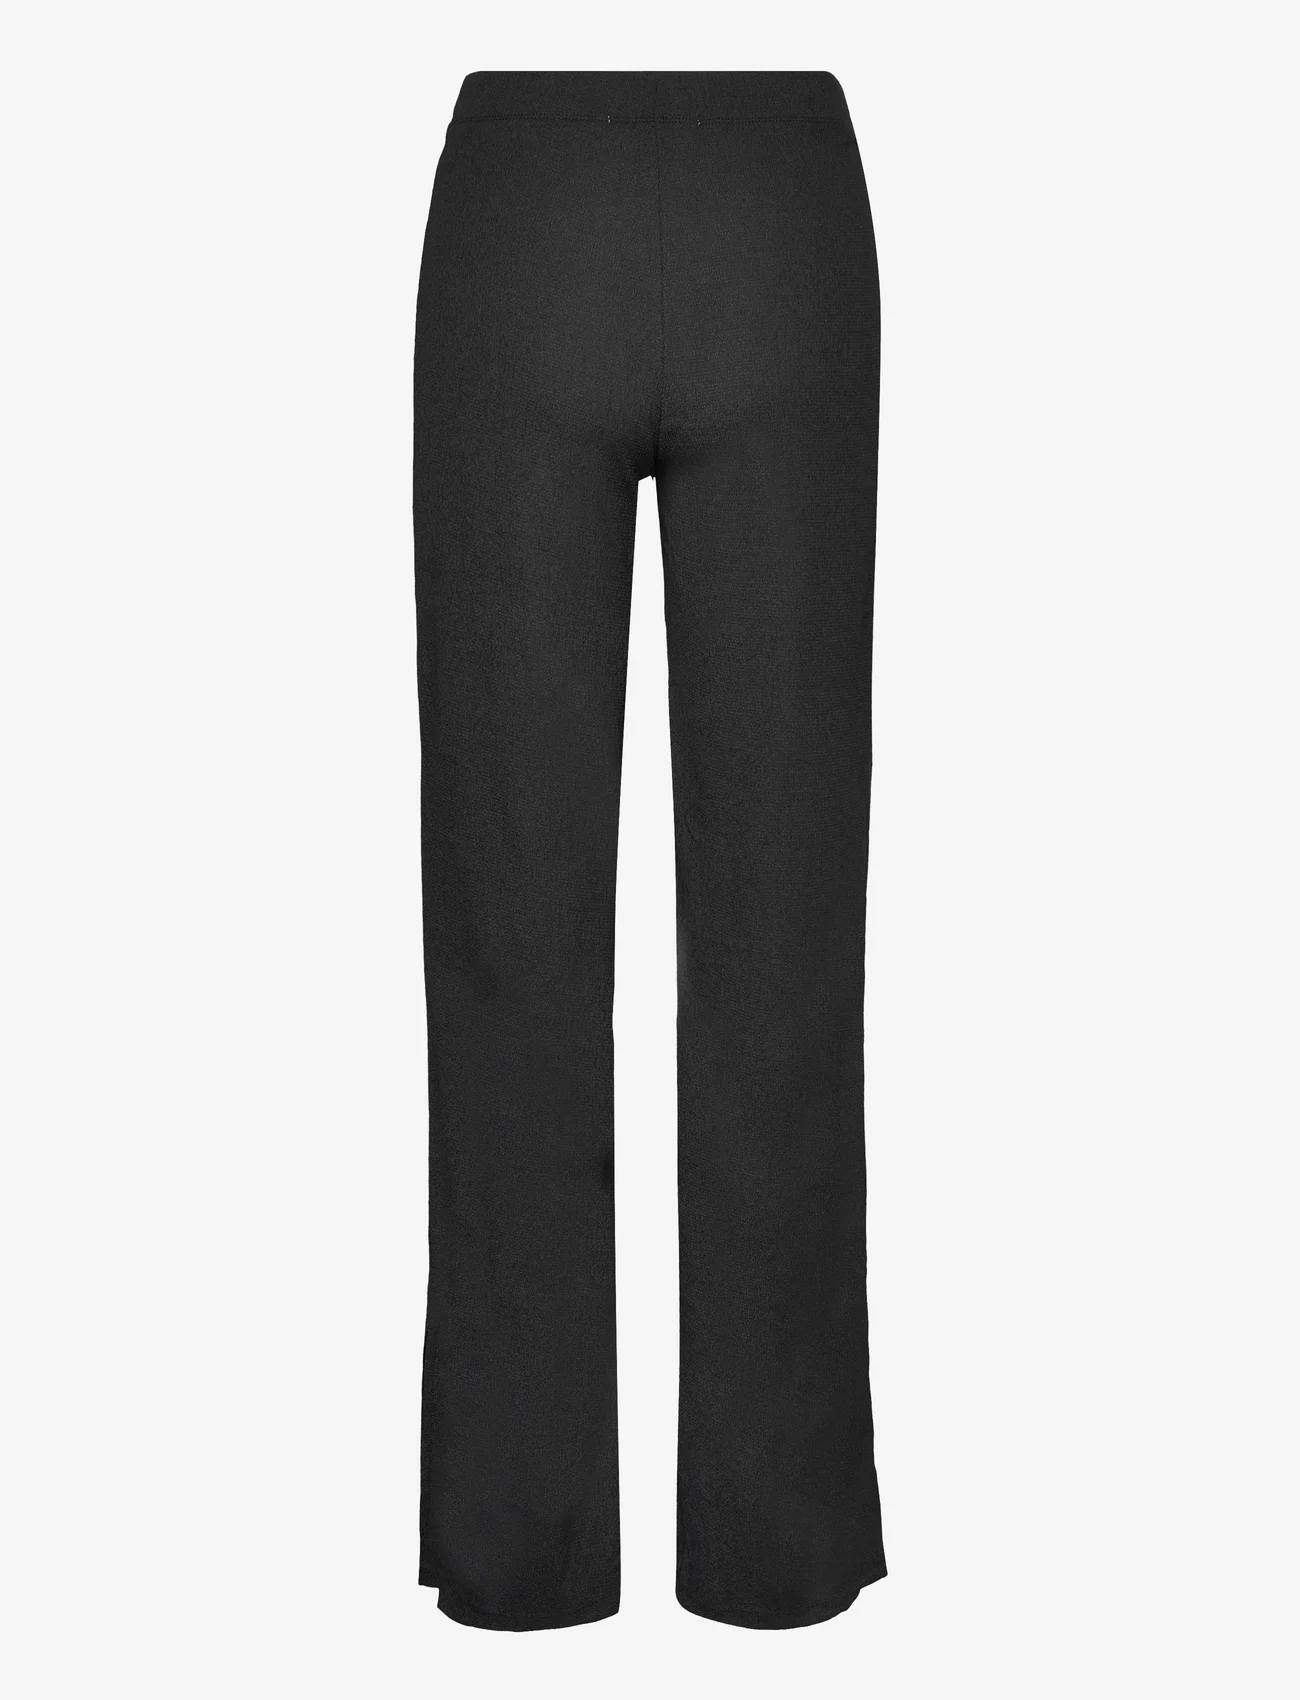 Calvin Klein Jeans - STRAIGHT KNIT PANTS - kelnės - ck black - 1